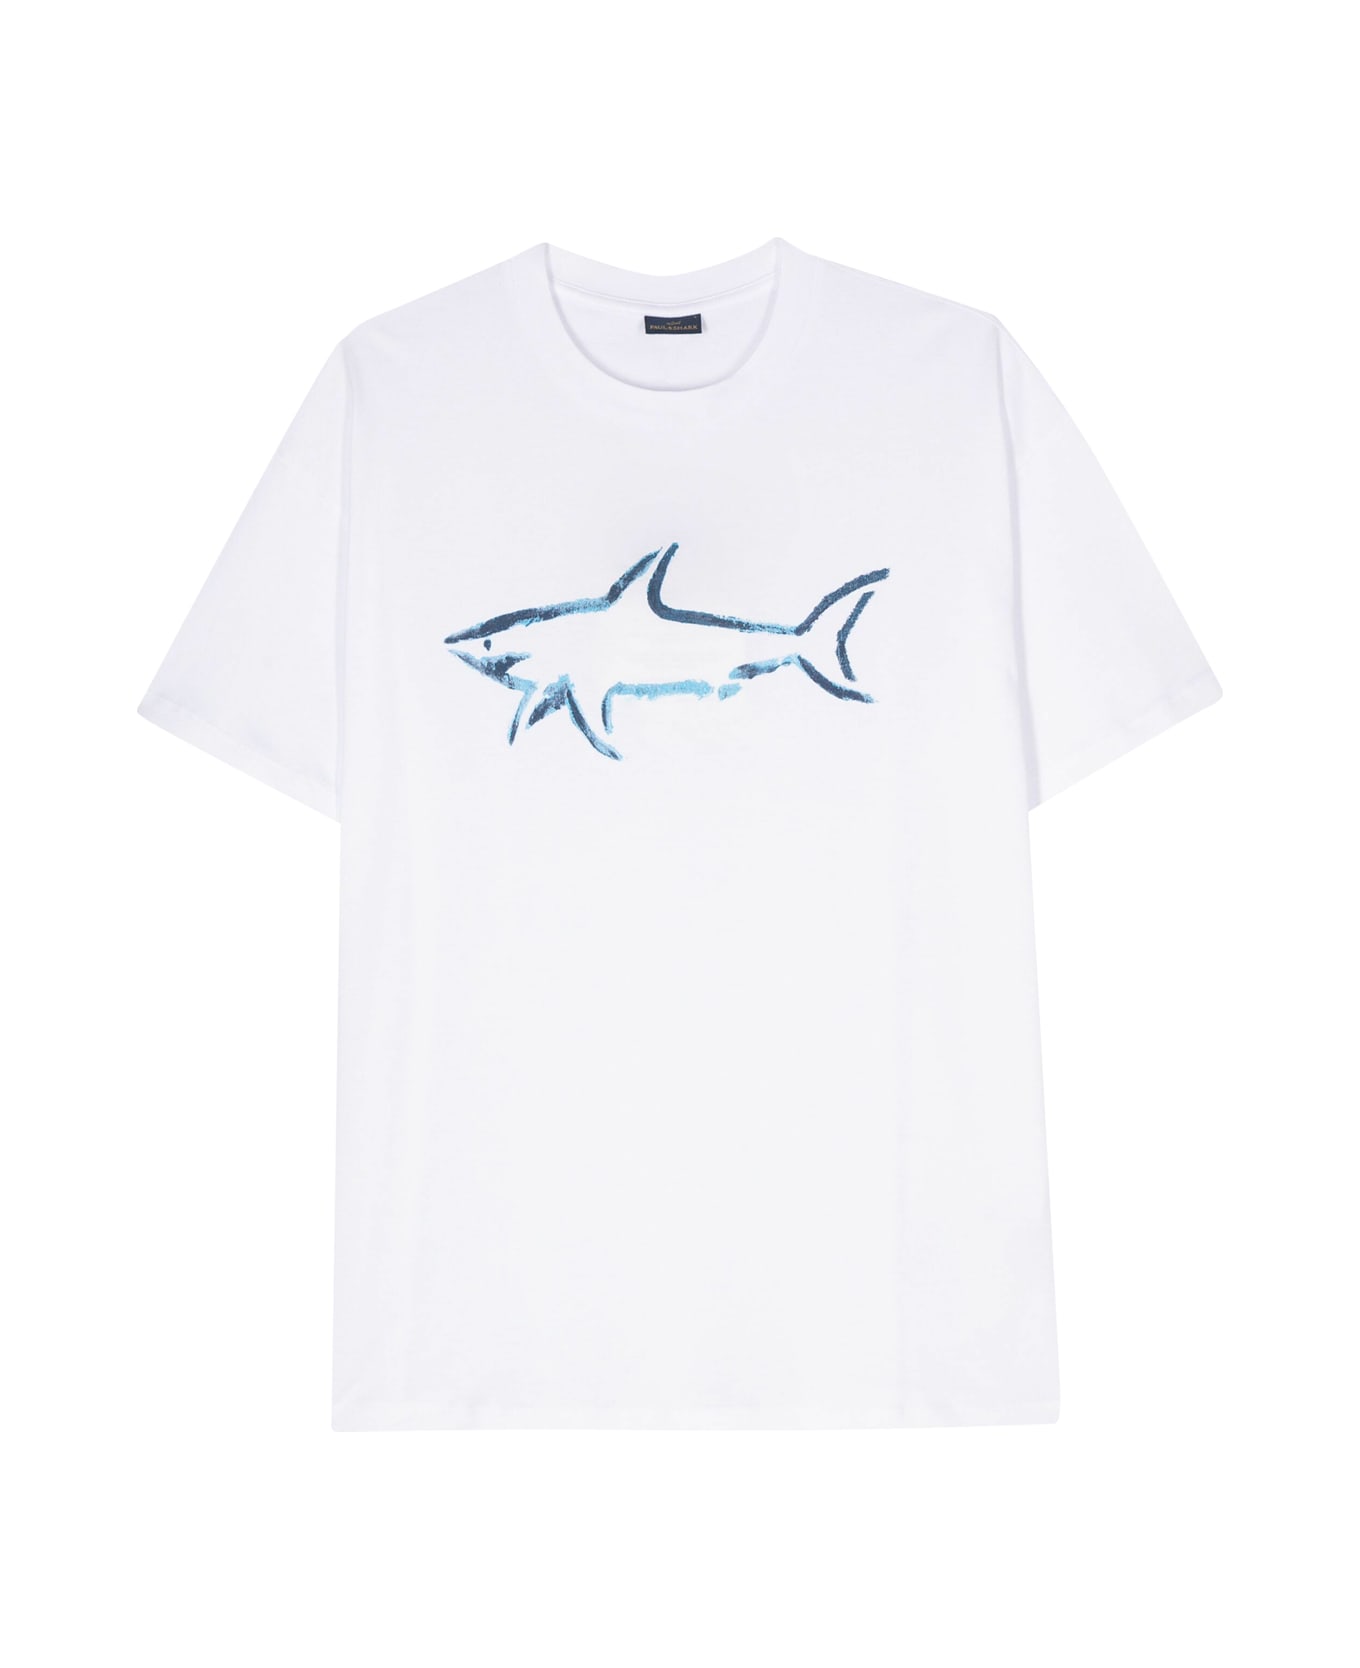 Paul&Shark T-shirt Cotton - White